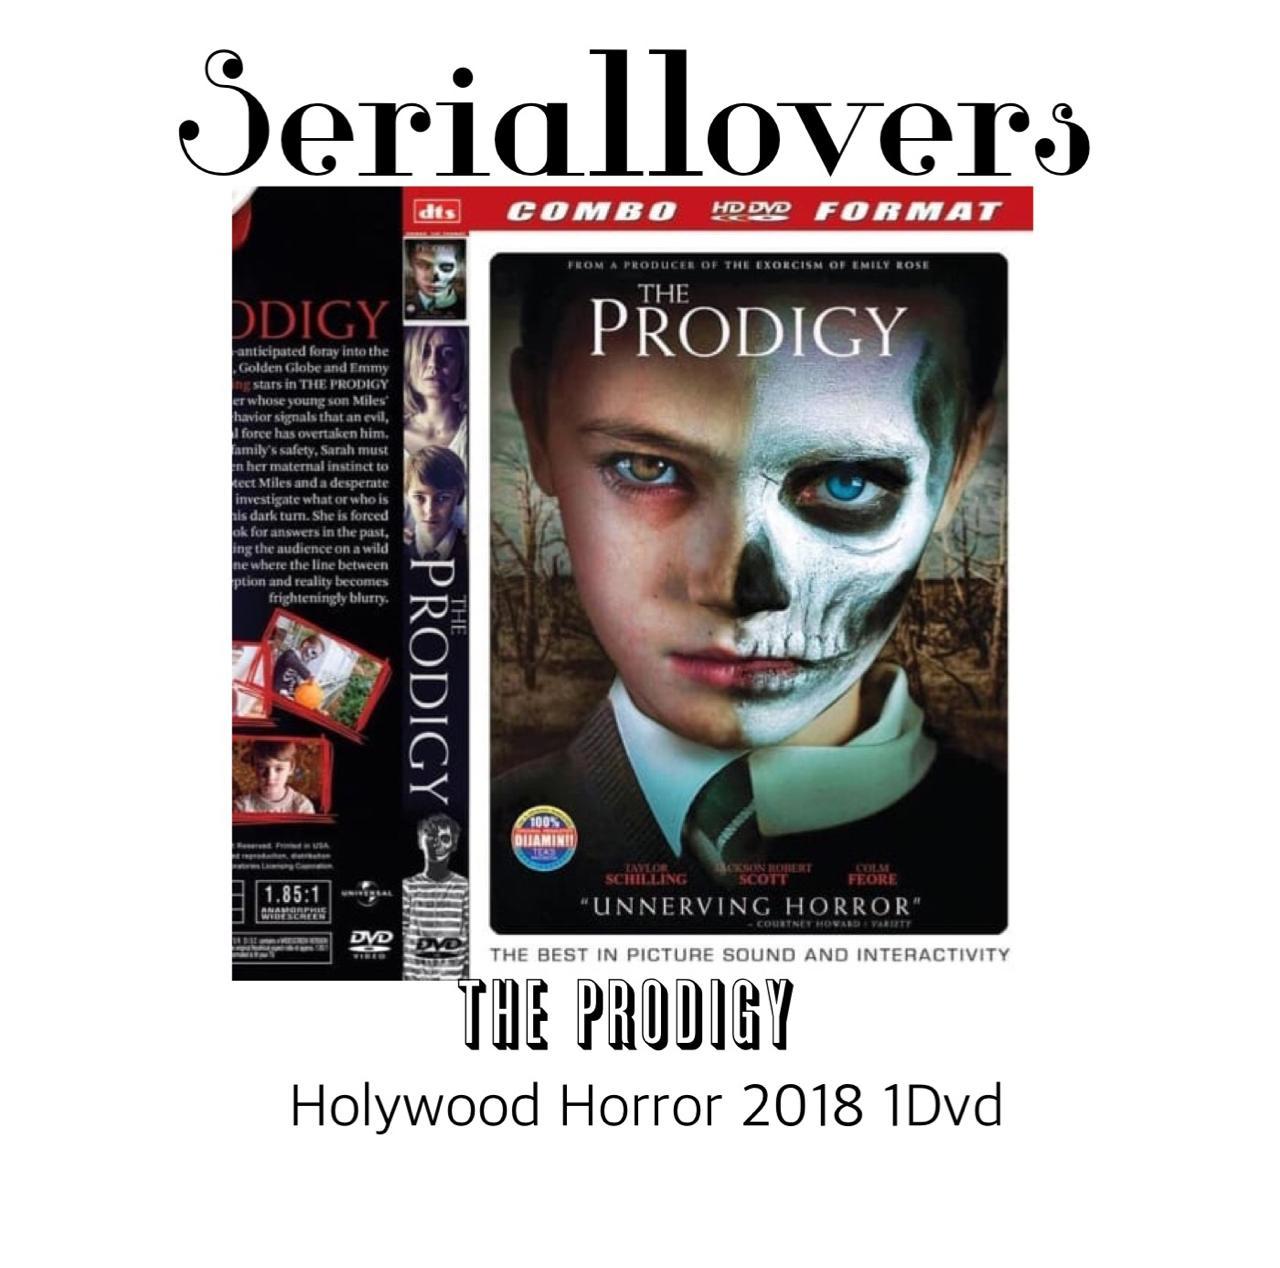 the prodigy movie 2018